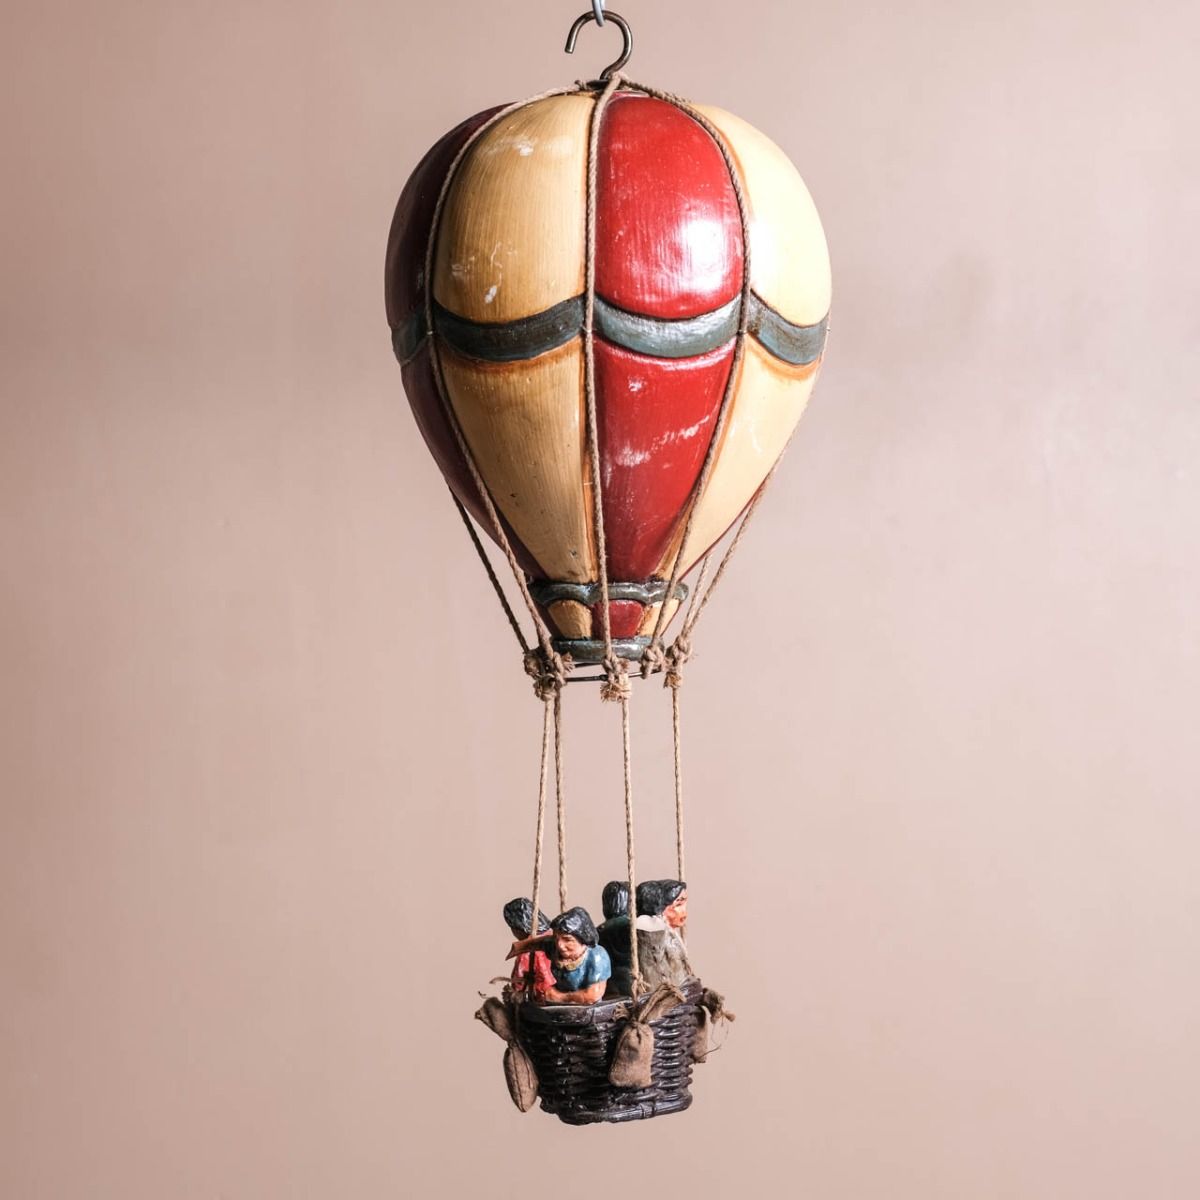 Vintage Flying Balloon Trinket